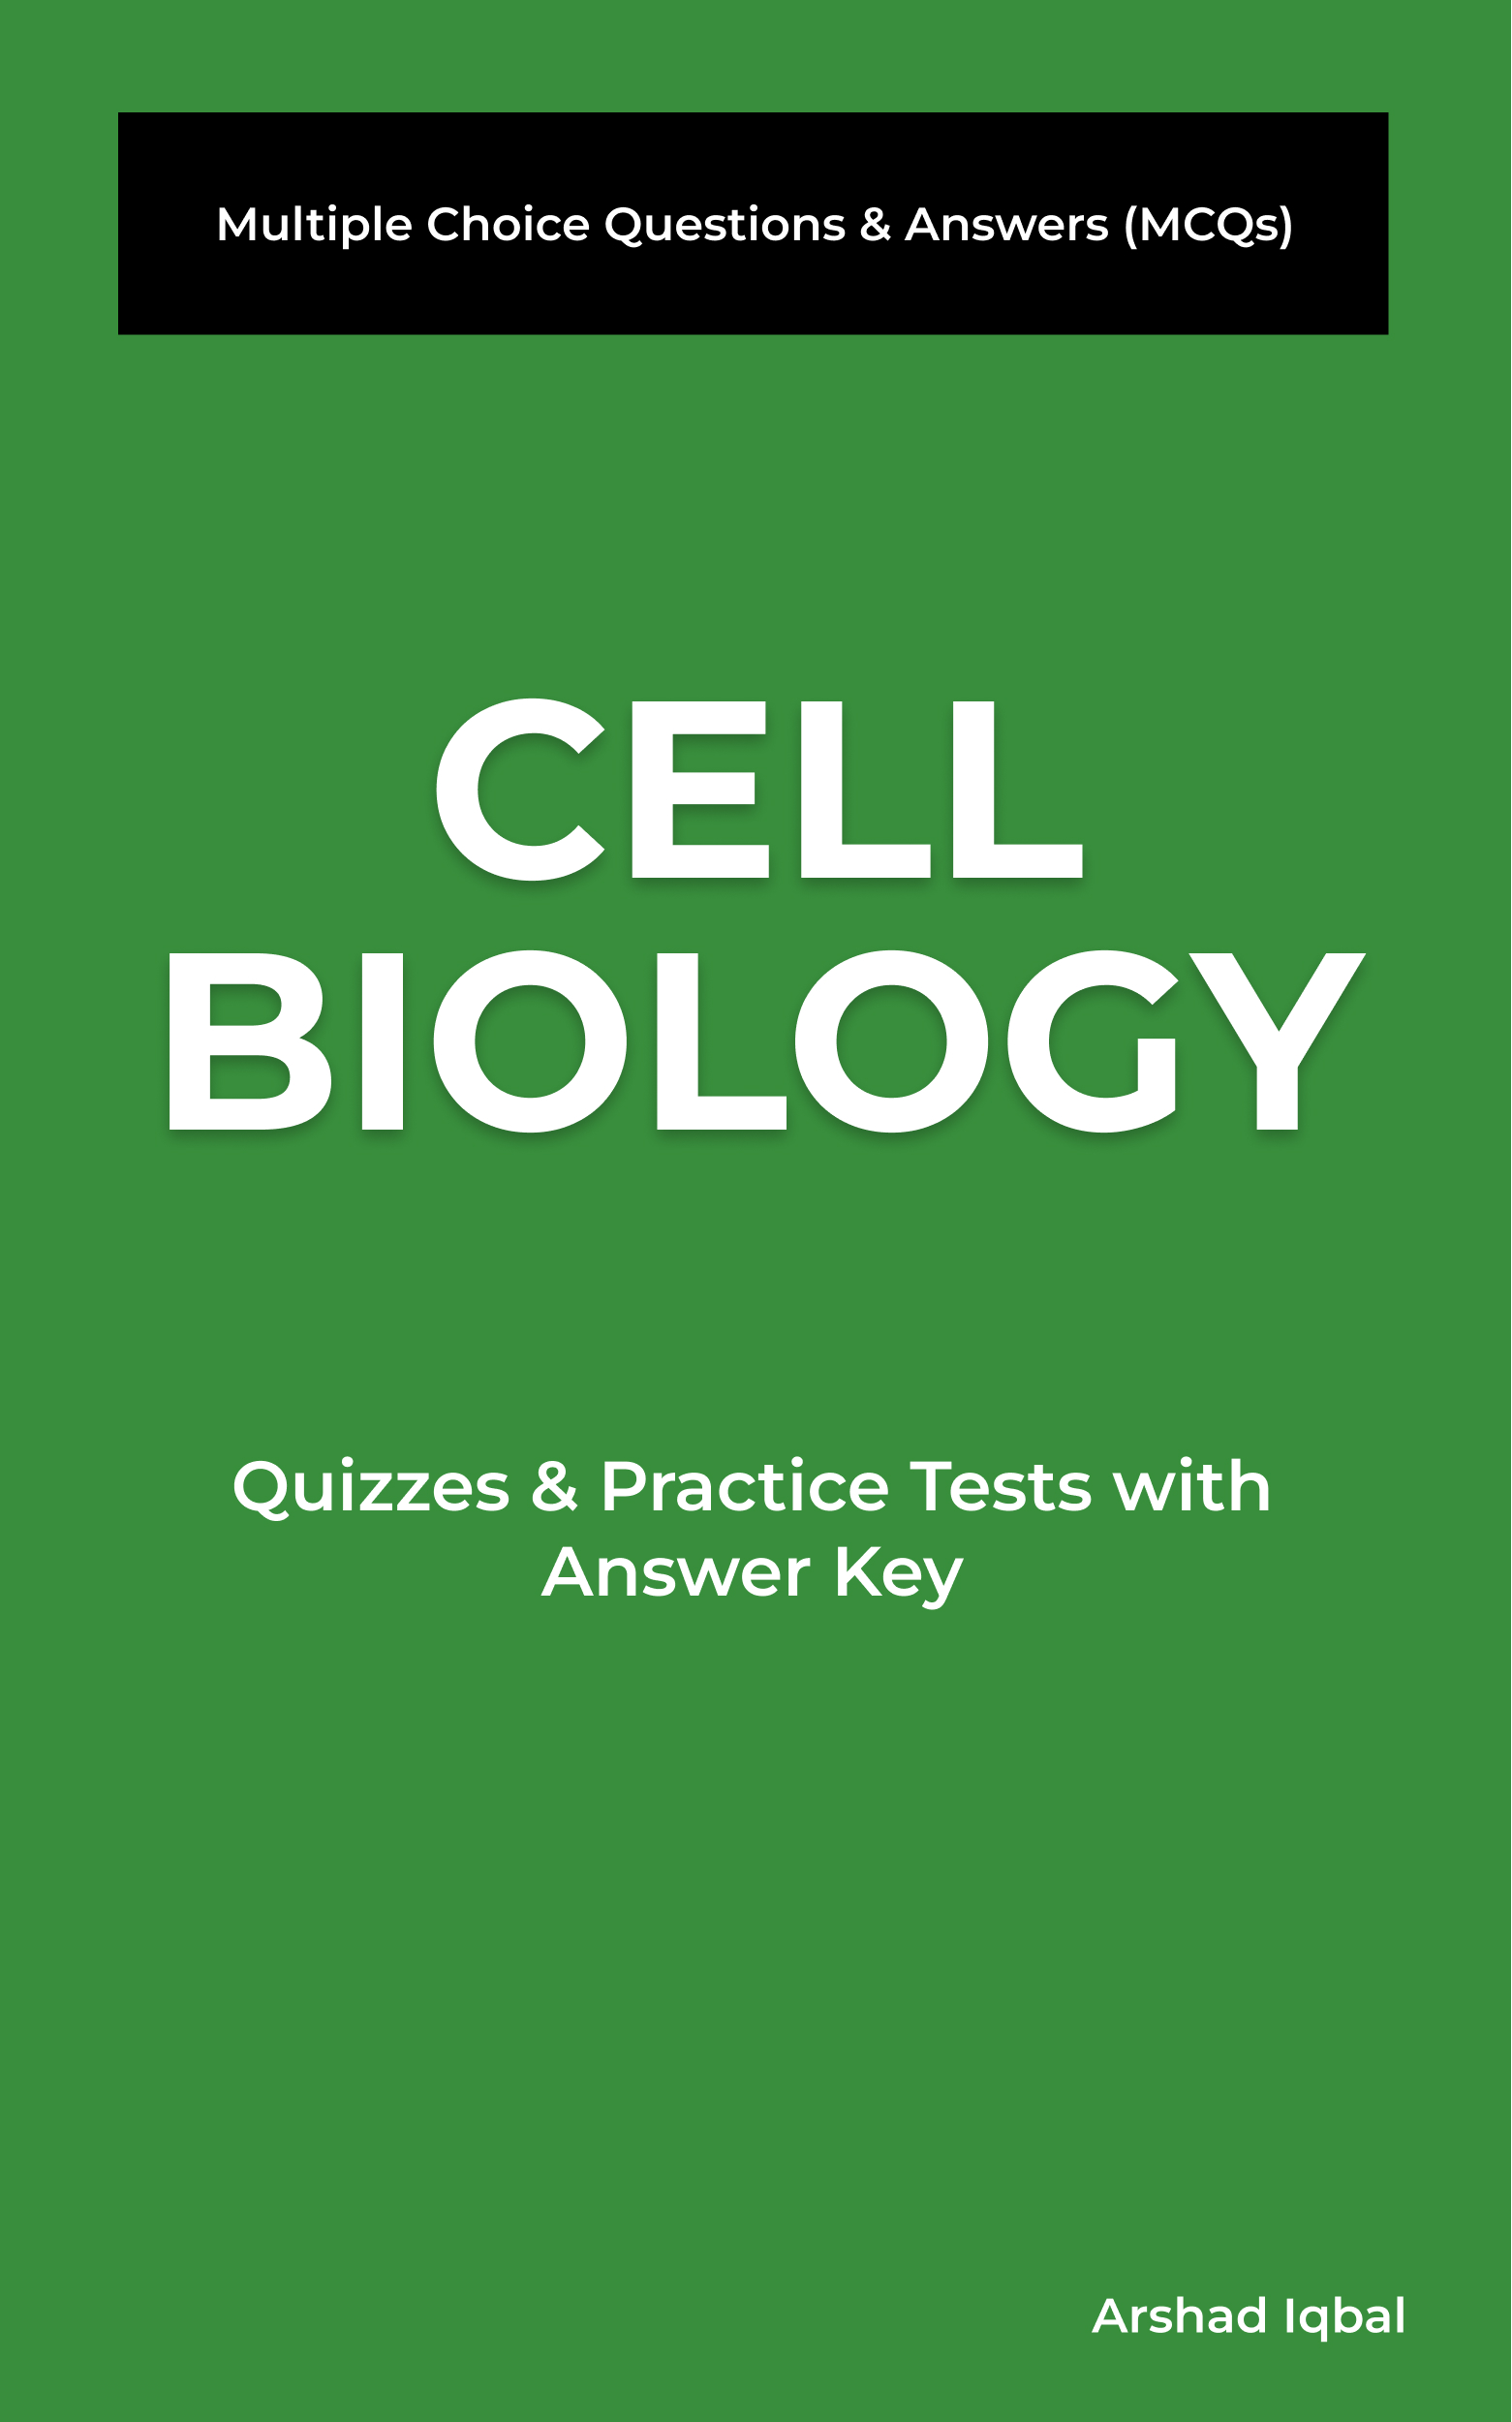 Cell Biology MCQ Book PDF